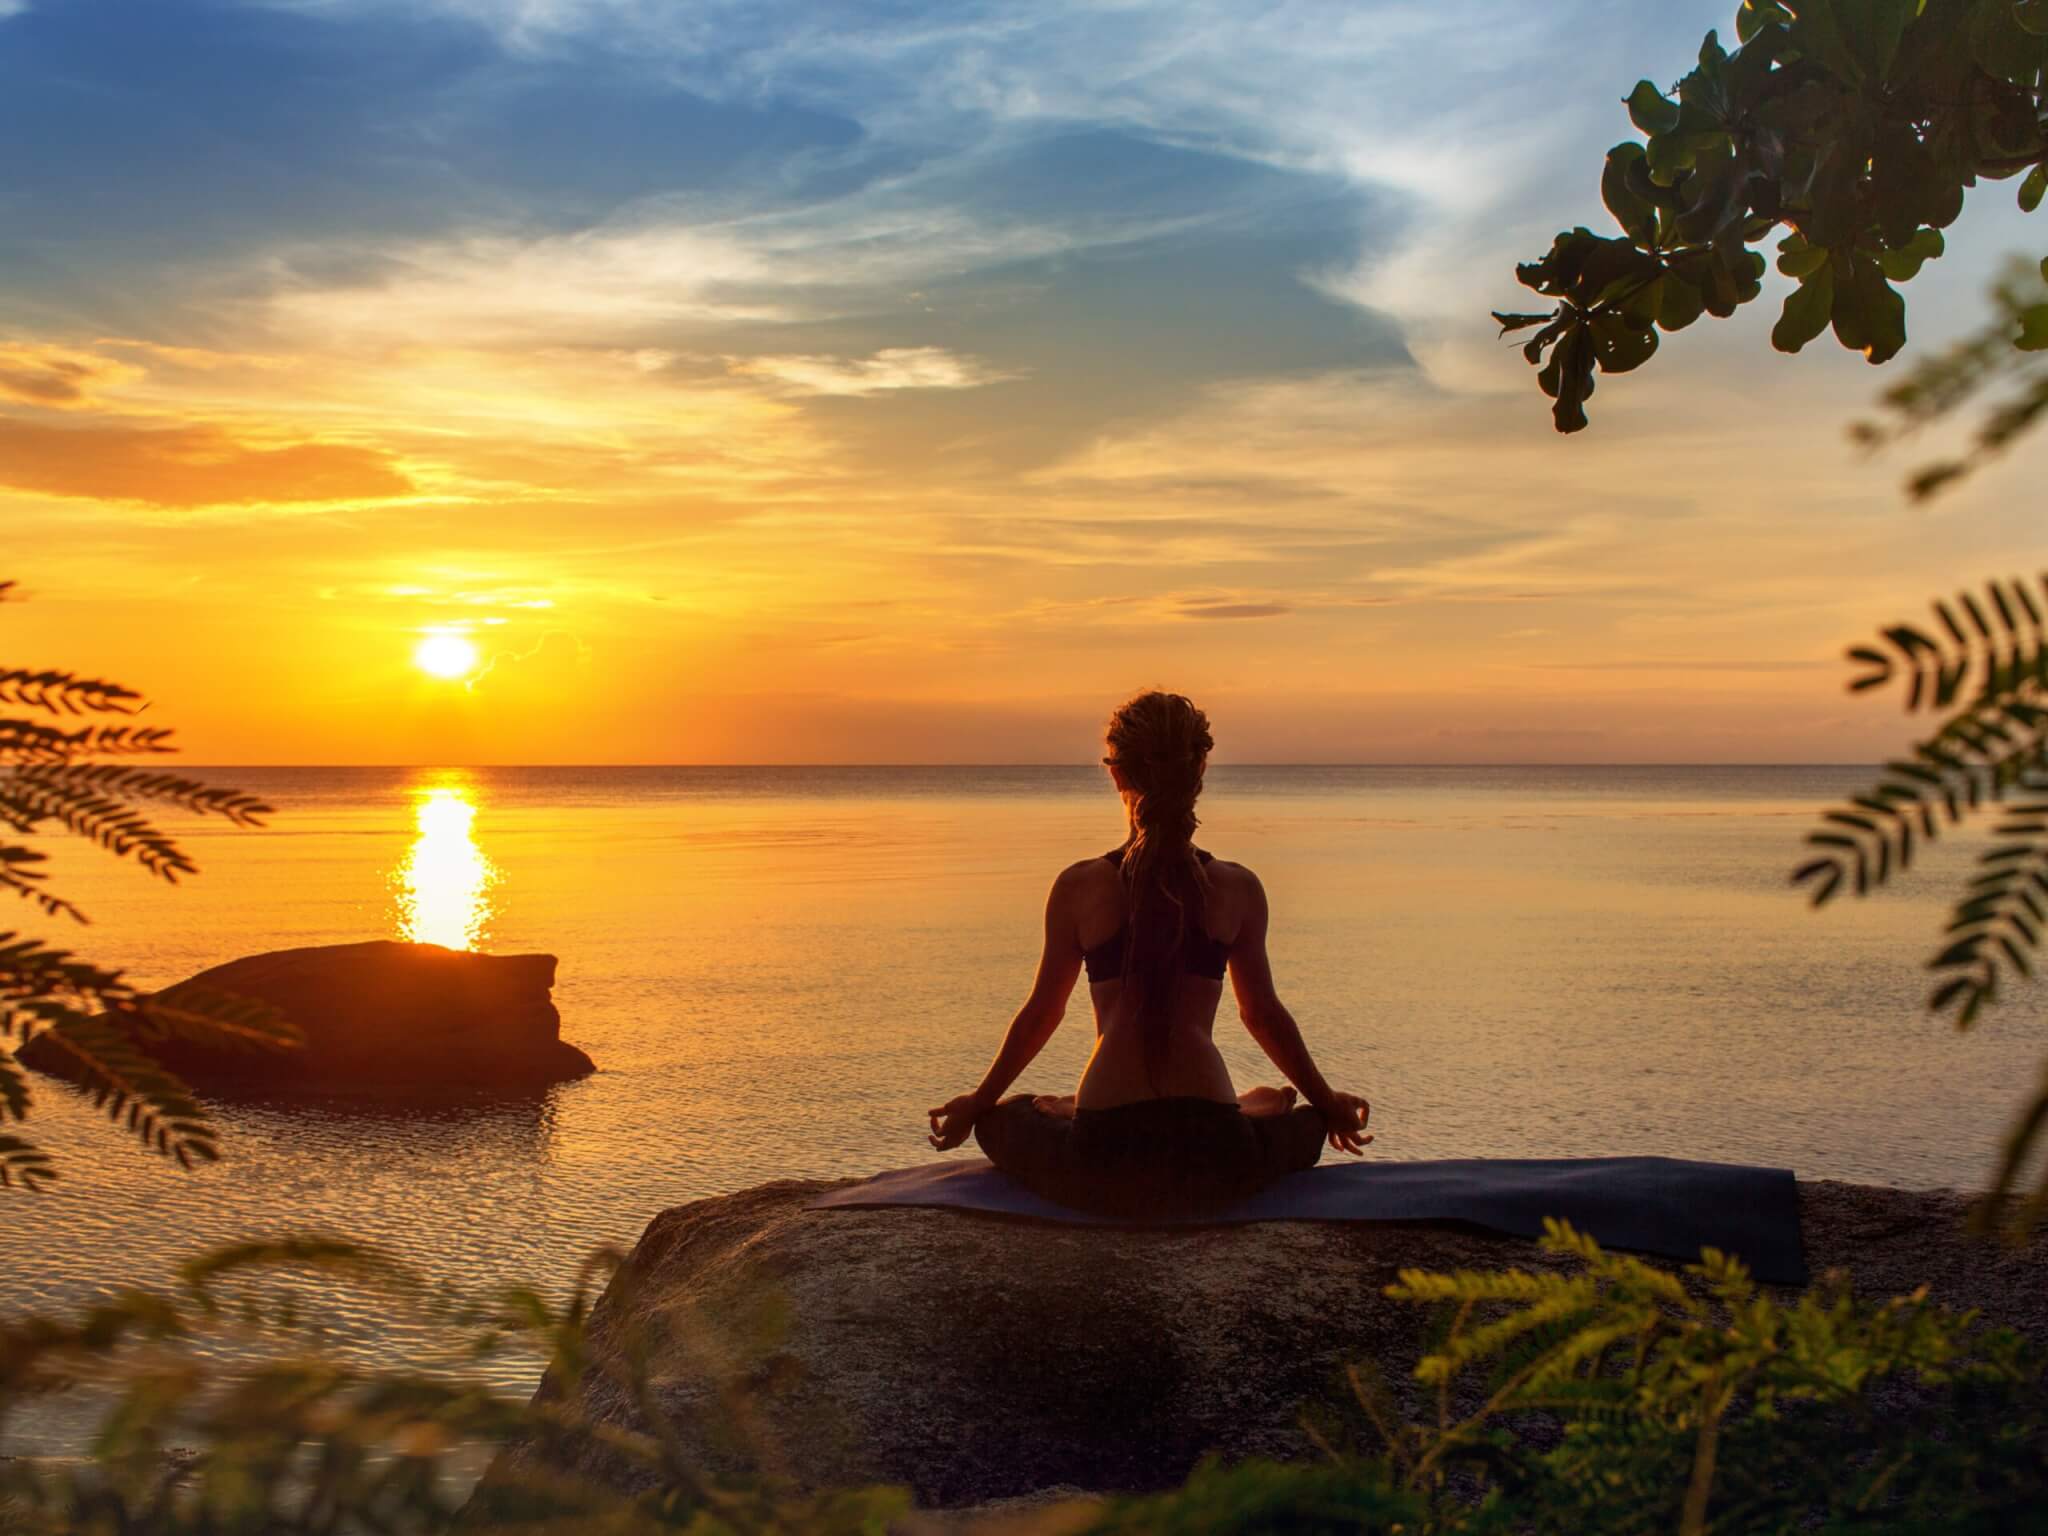 Медитация на спокойствие. Спокойствие и умиротворение. Медитация на закате. Медитация на берегу моря. Медитация на расслабление.